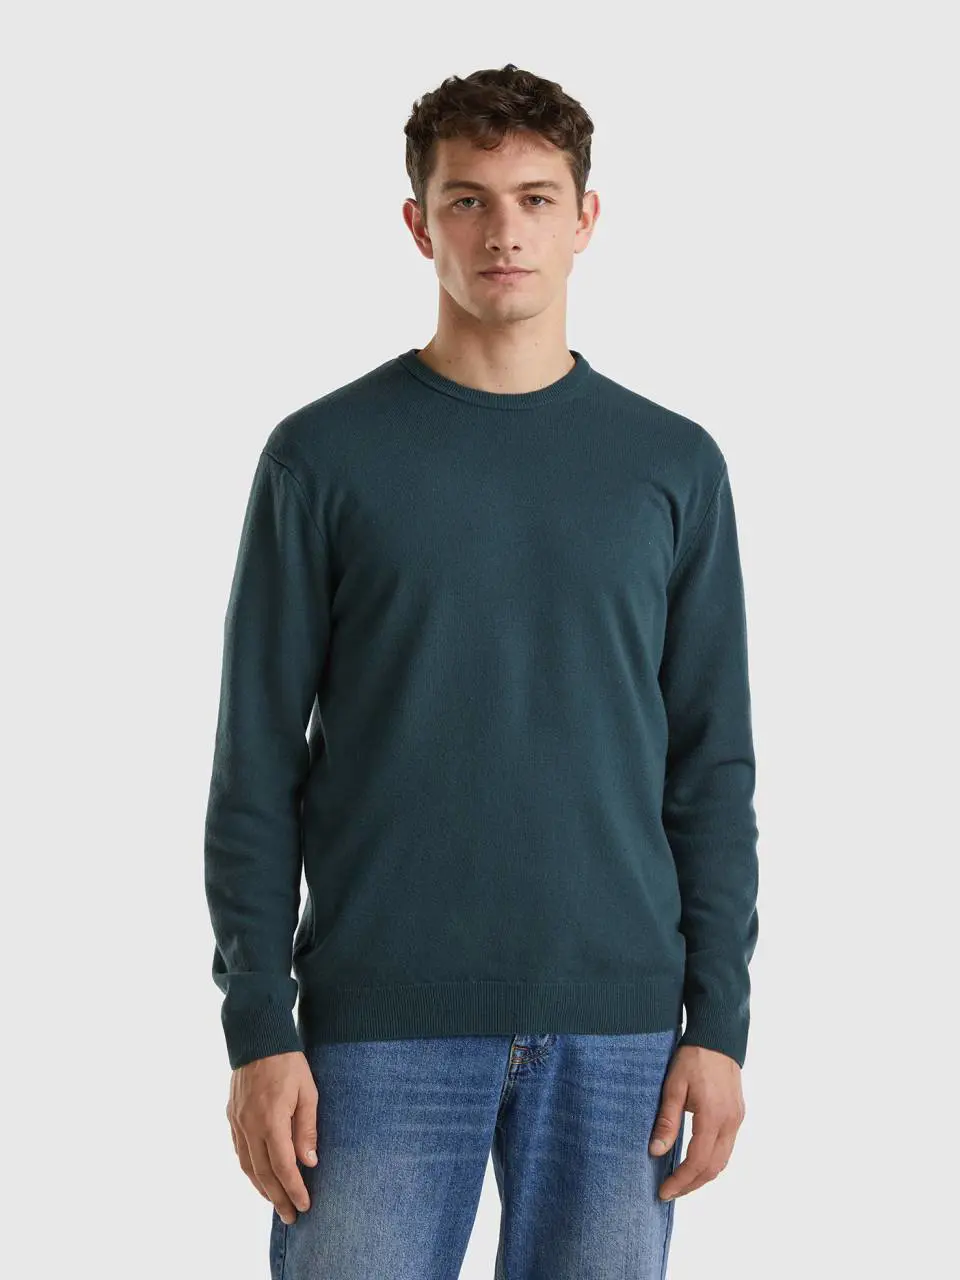 Benetton dark green crew neck sweater in pure merino wool. 1